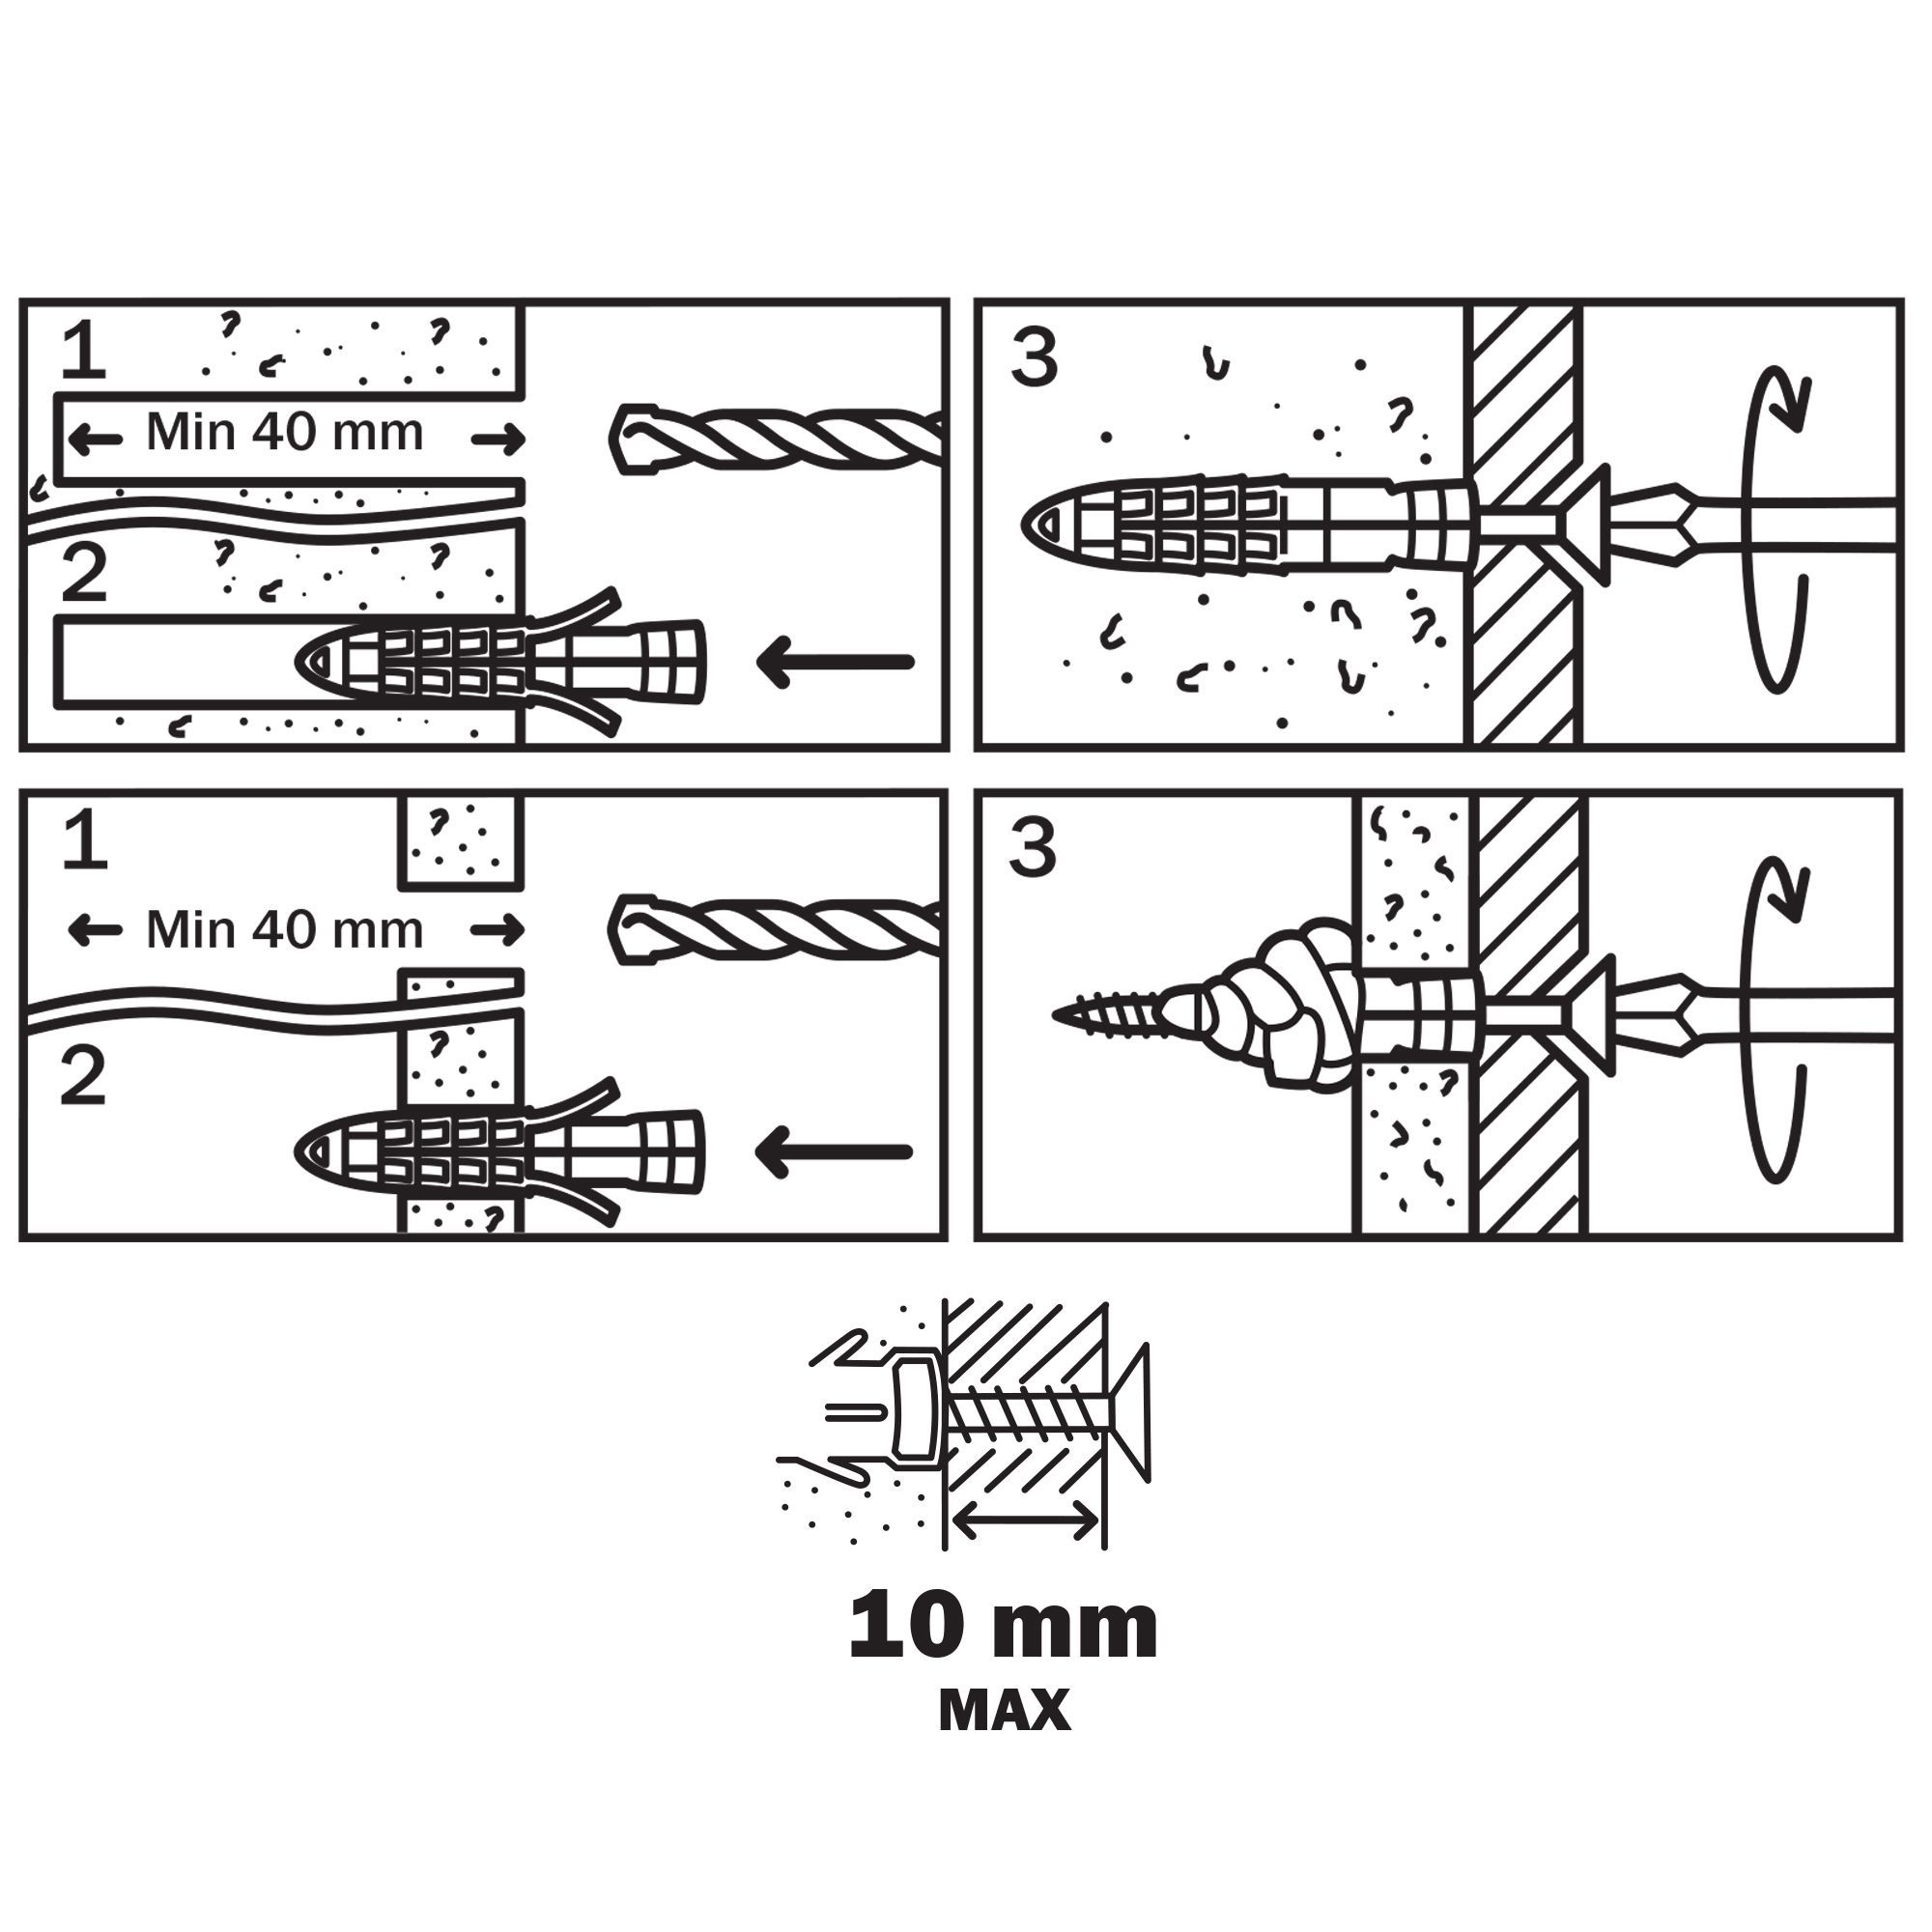 Diall Universal Grey Multi-purpose screw & wall plug (Dia)6mm (L)30mm, Pack of 10